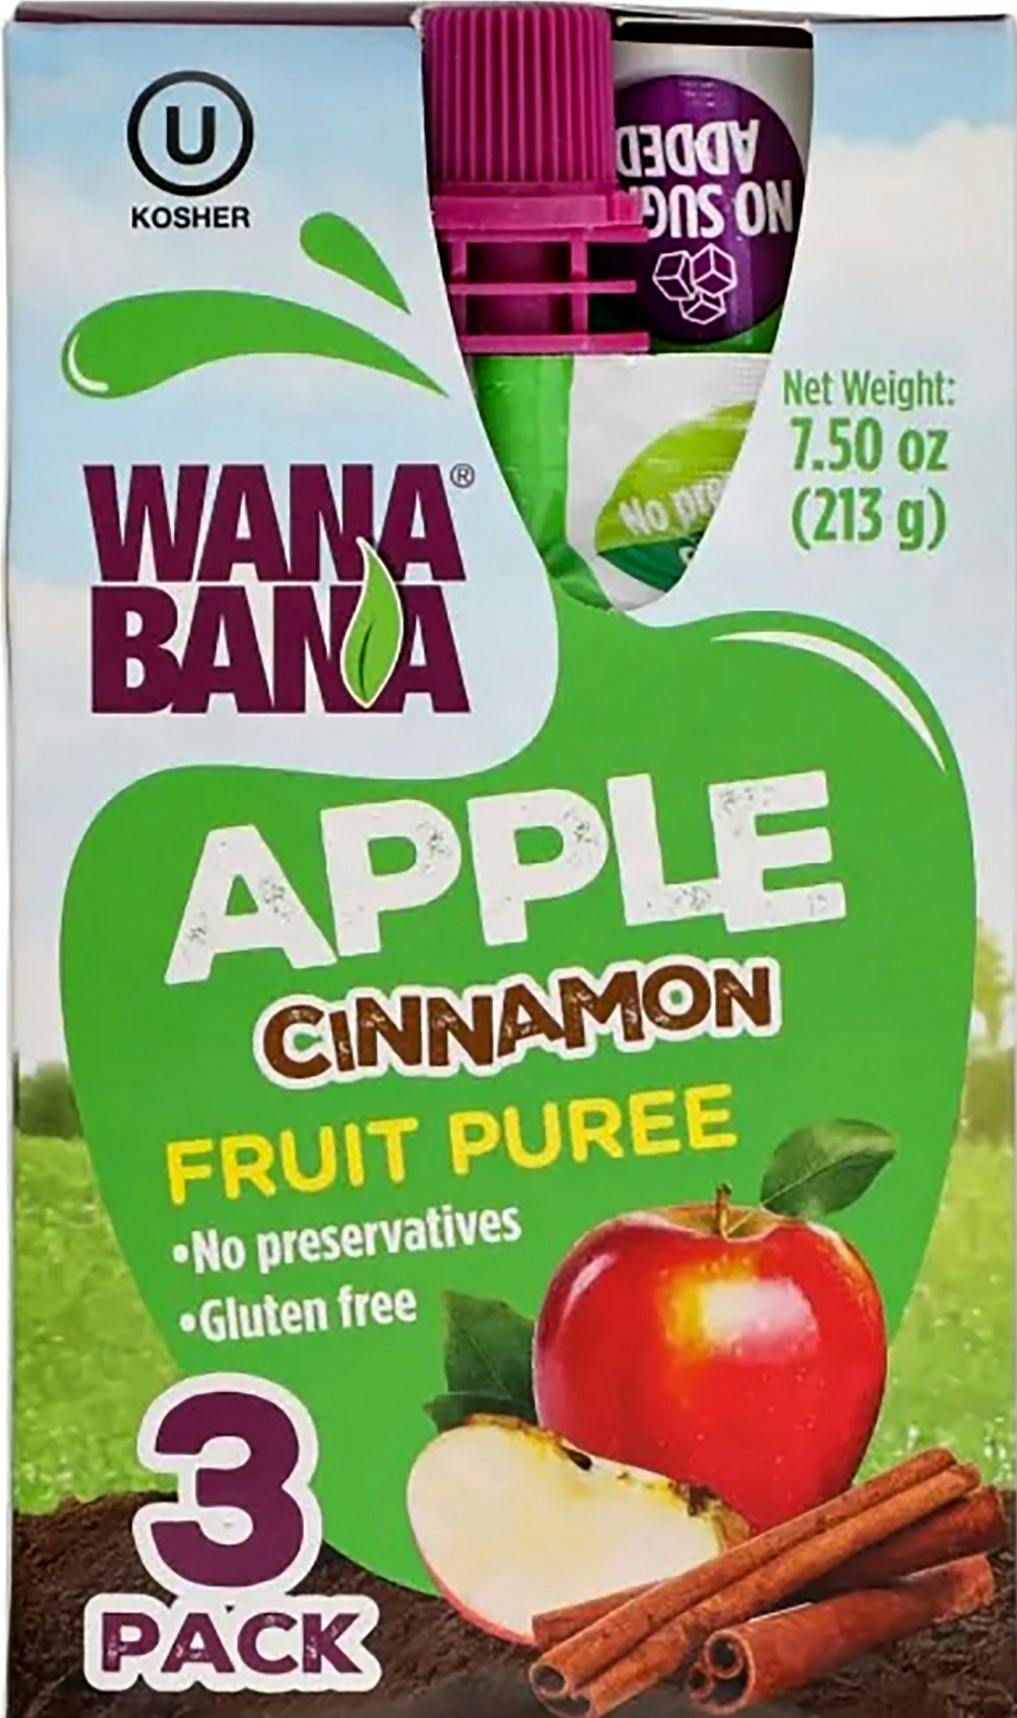 WanaBana fruit purée pouches